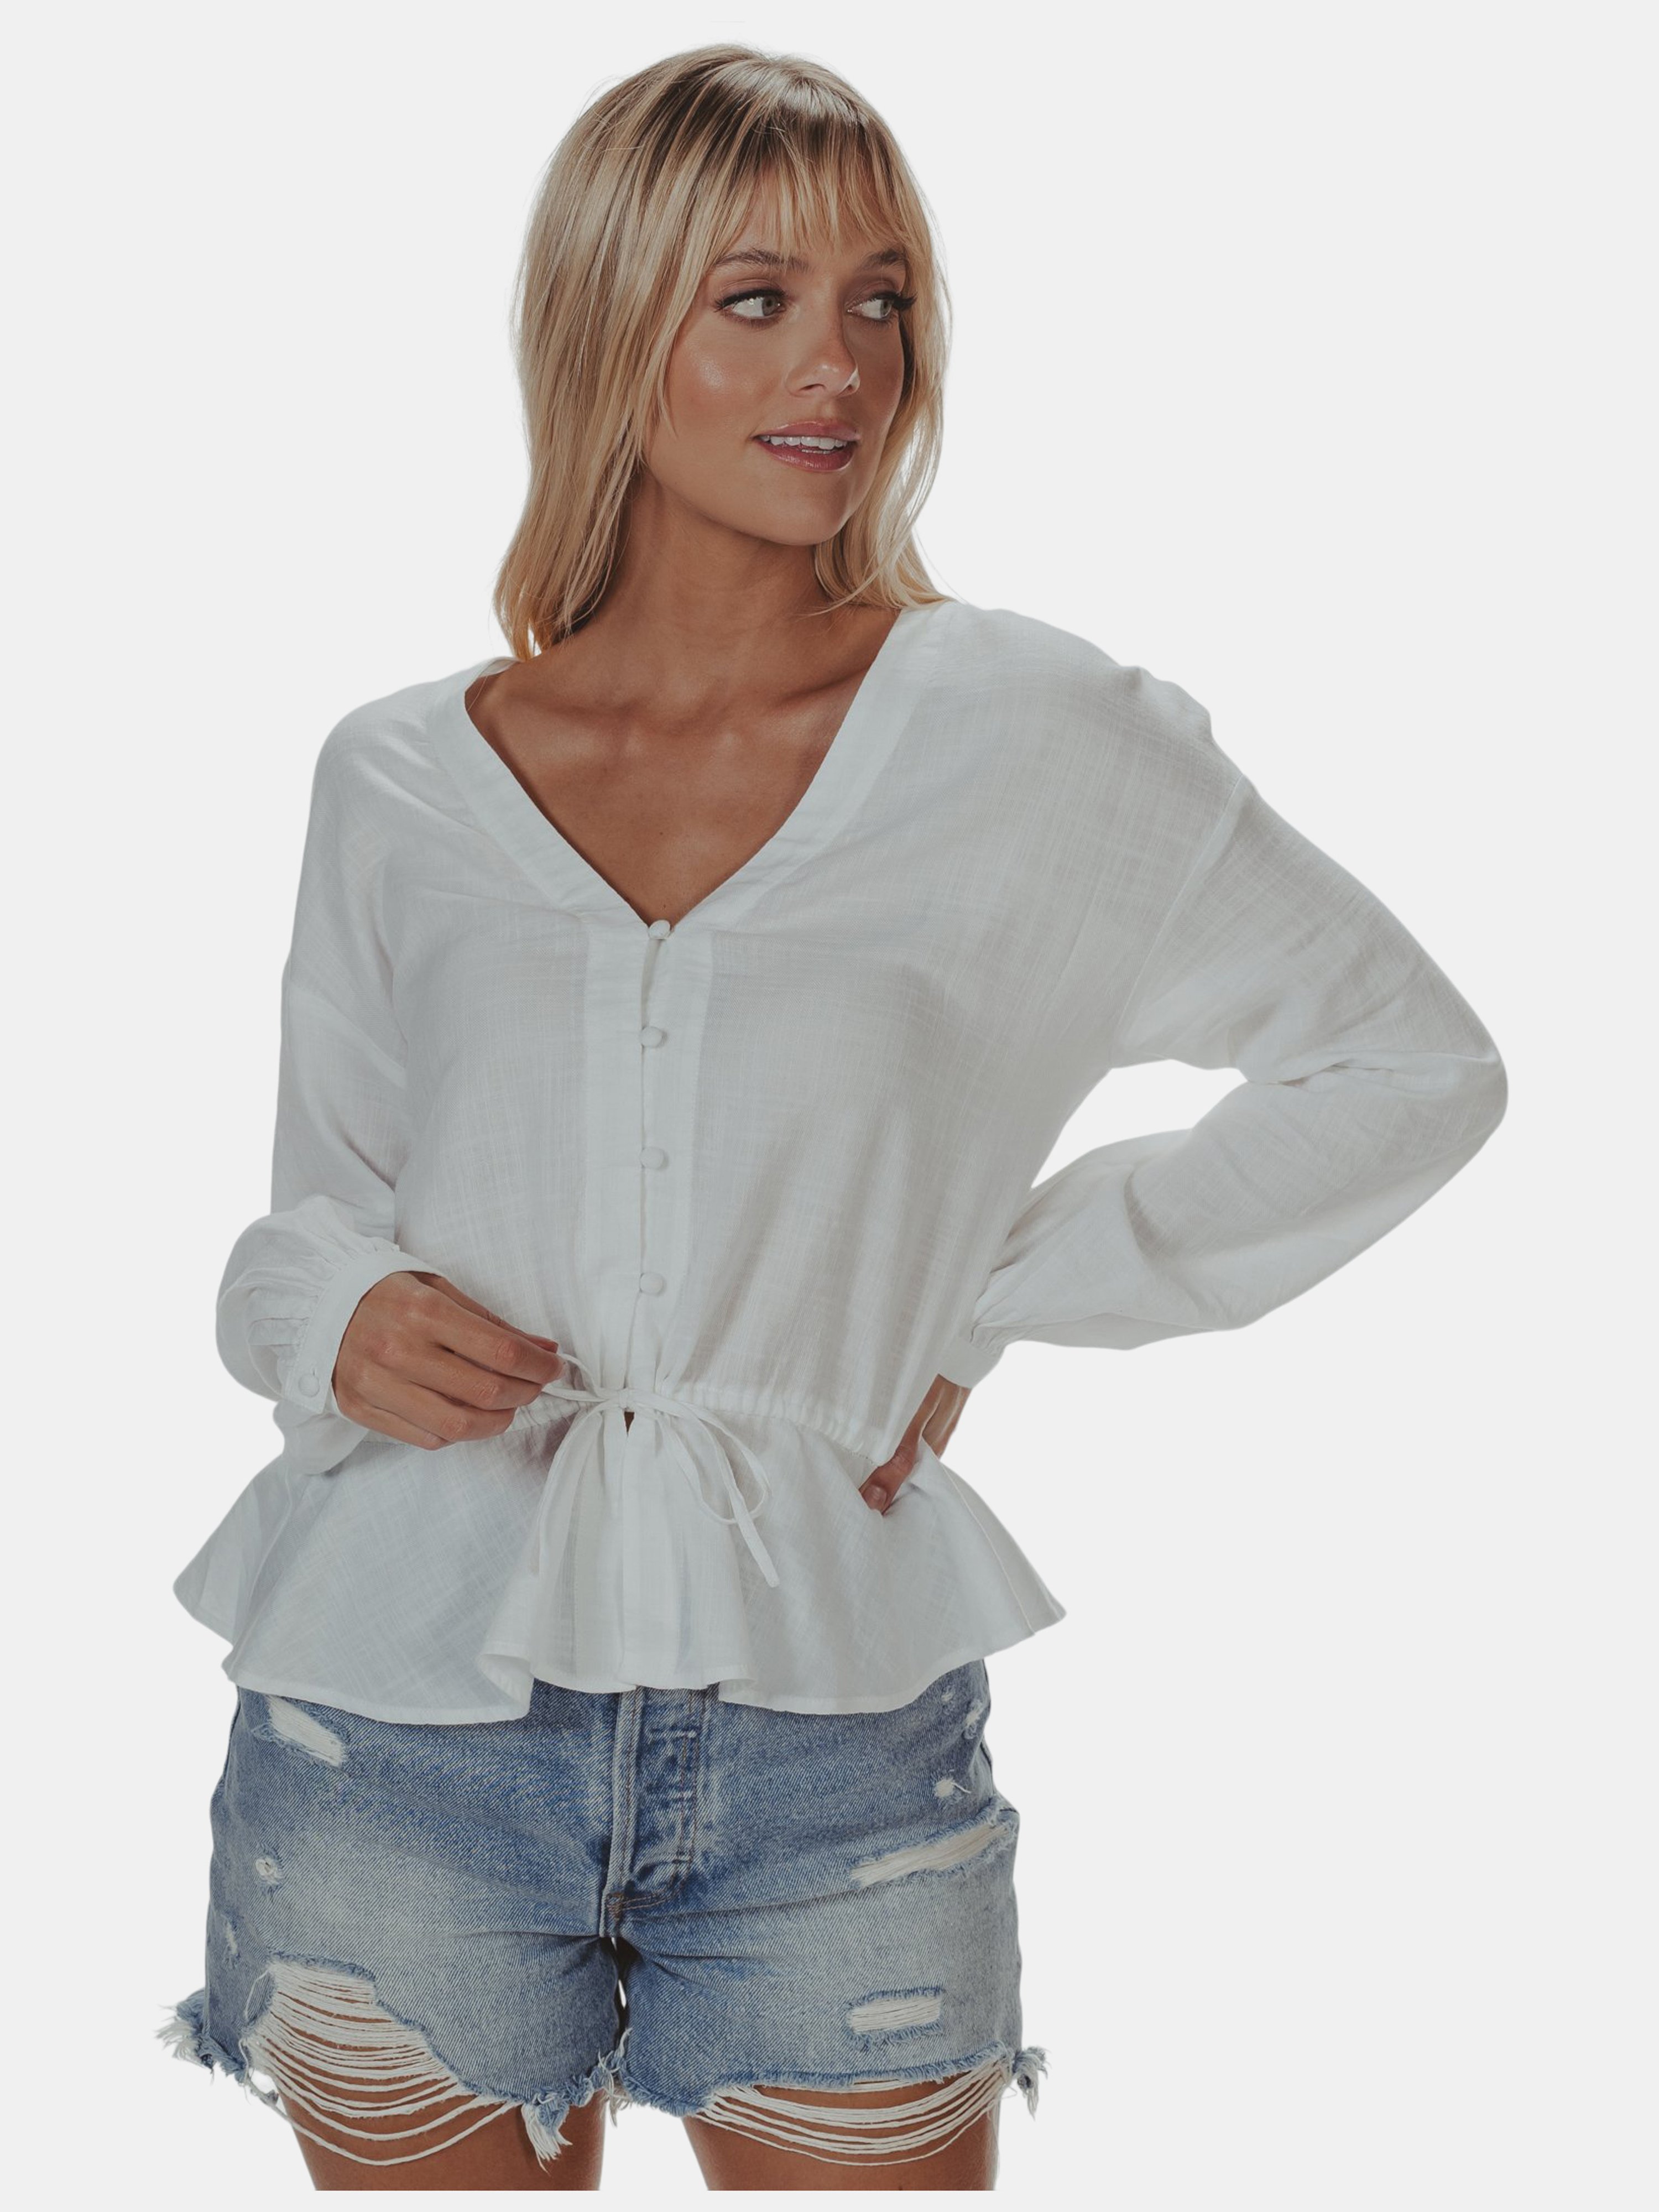 The Normal Brand Women's Midsummer Blouse In White